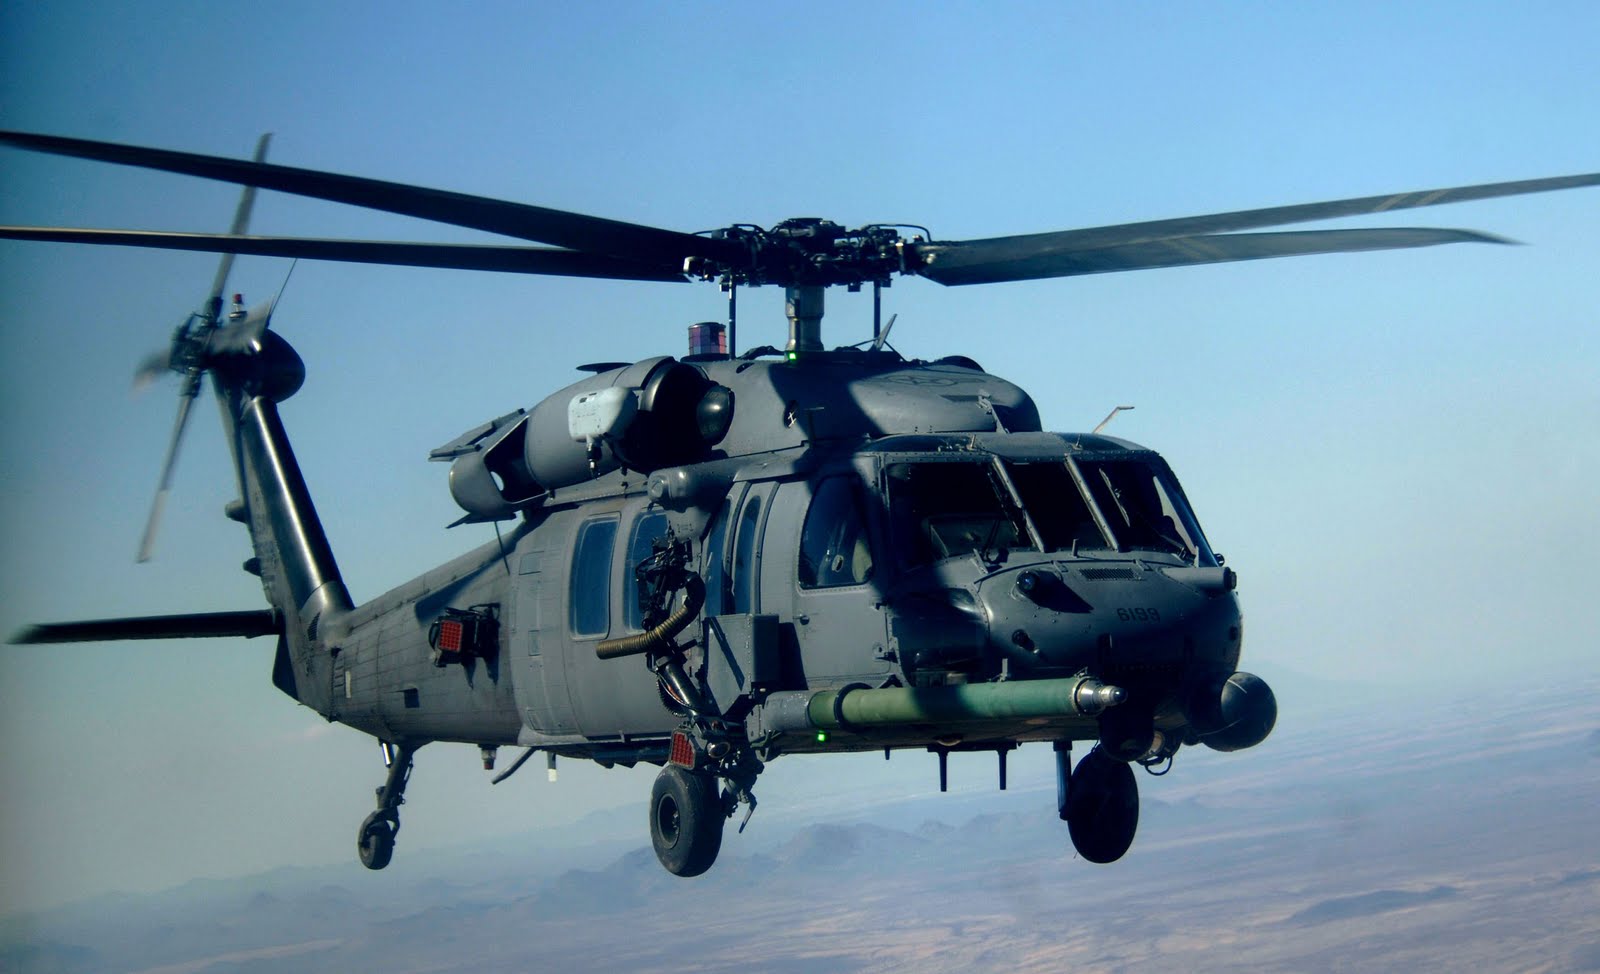 Вертолет перебрасывал отряд. Sikorsky uh-60 Black Hawk. Sikorsky uh-60 Black Hawk вертолет. Вертолетах hh60 Black Hawk. Стелс версия вертолет Sikorsky uh-60 Black Hawk,.